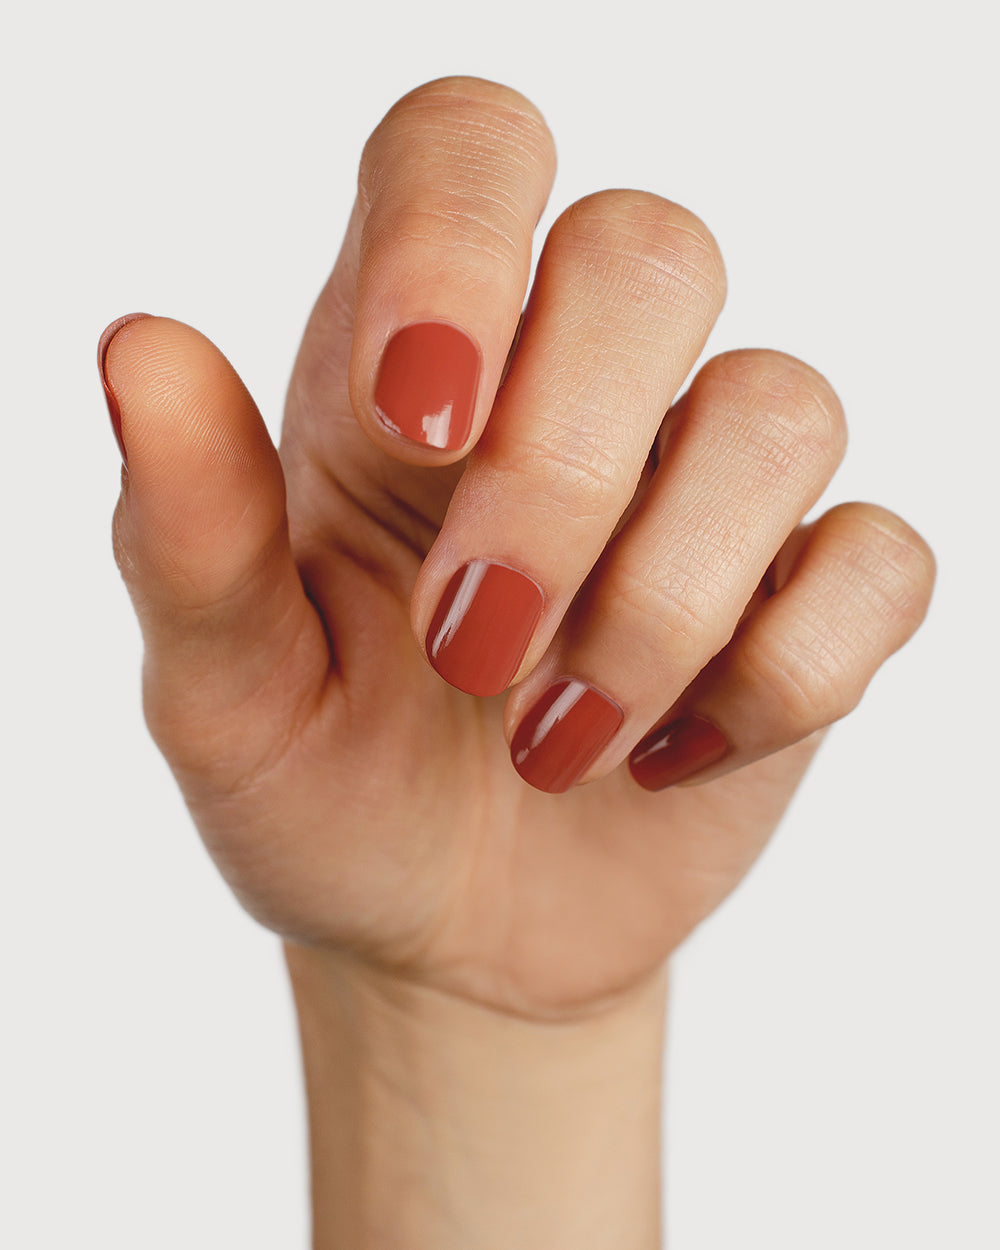 terracotta nail polish hand swatch on fair skin tone